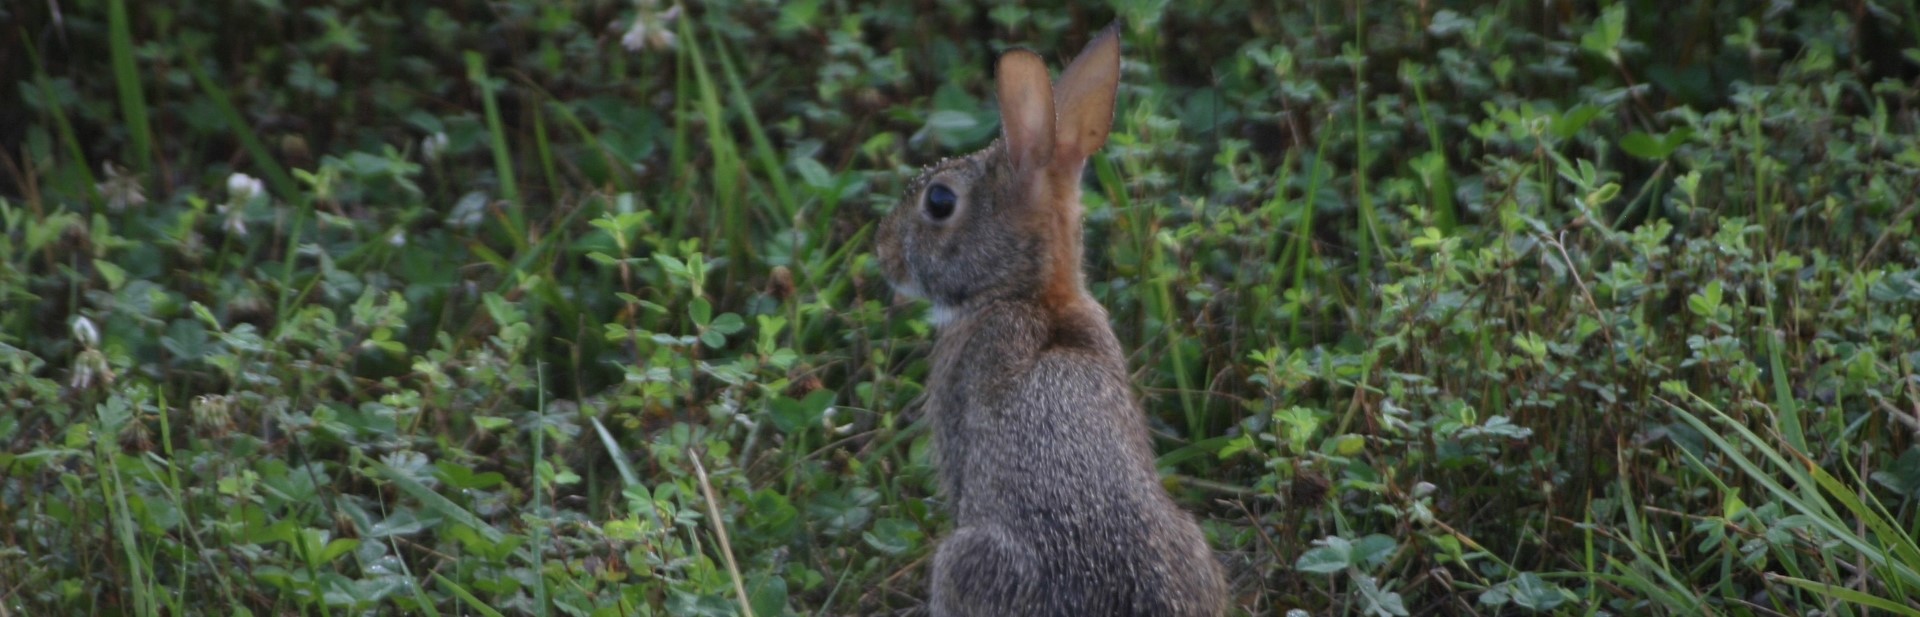 Rabbit Hunting Kentucky Department of Fish & Wildlife